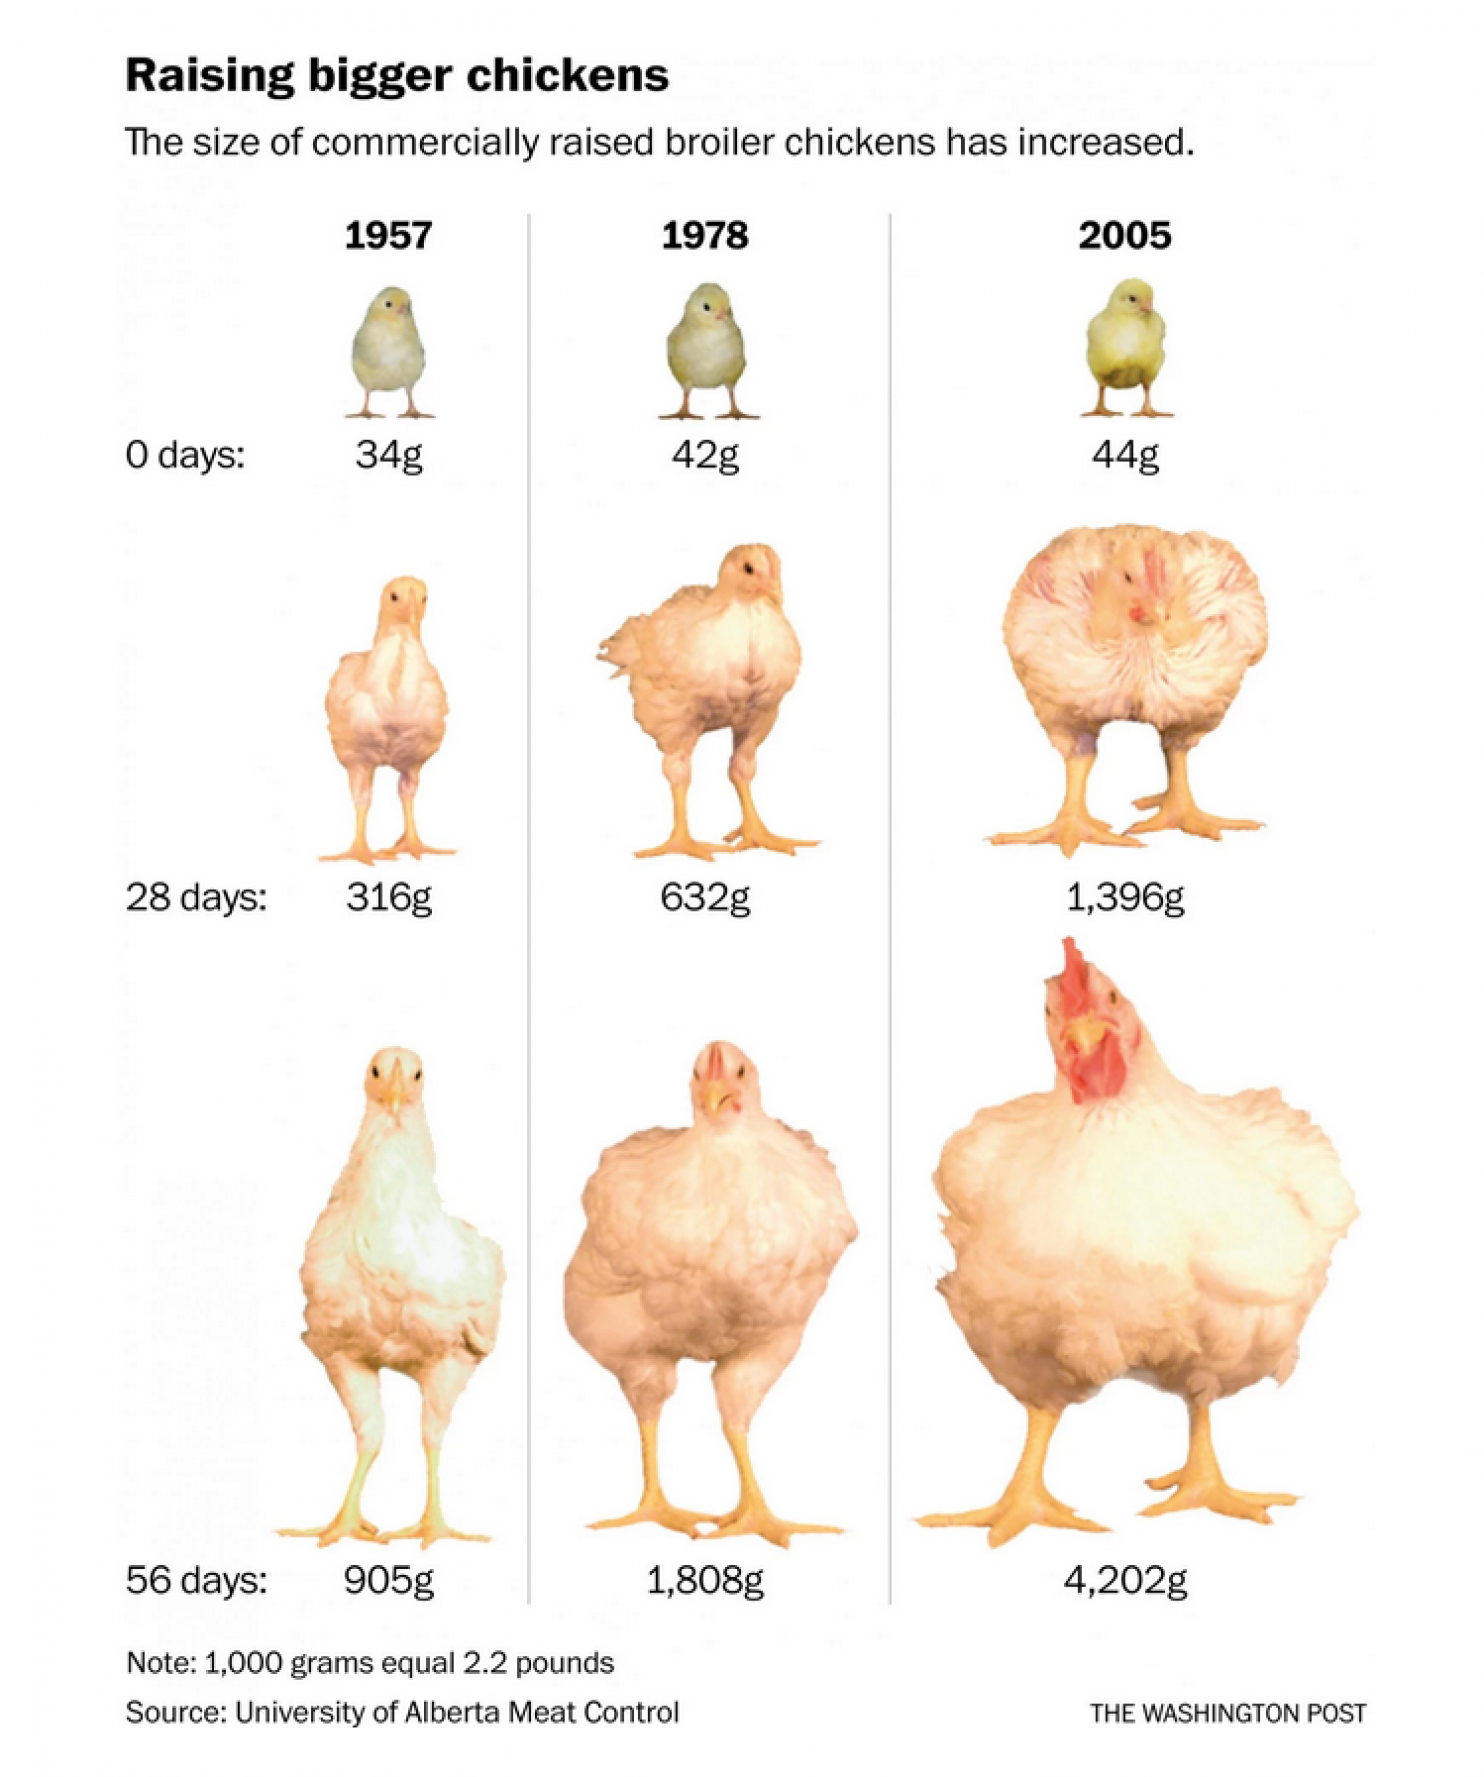 Характеристики лучших пород куриц, несущих яйца